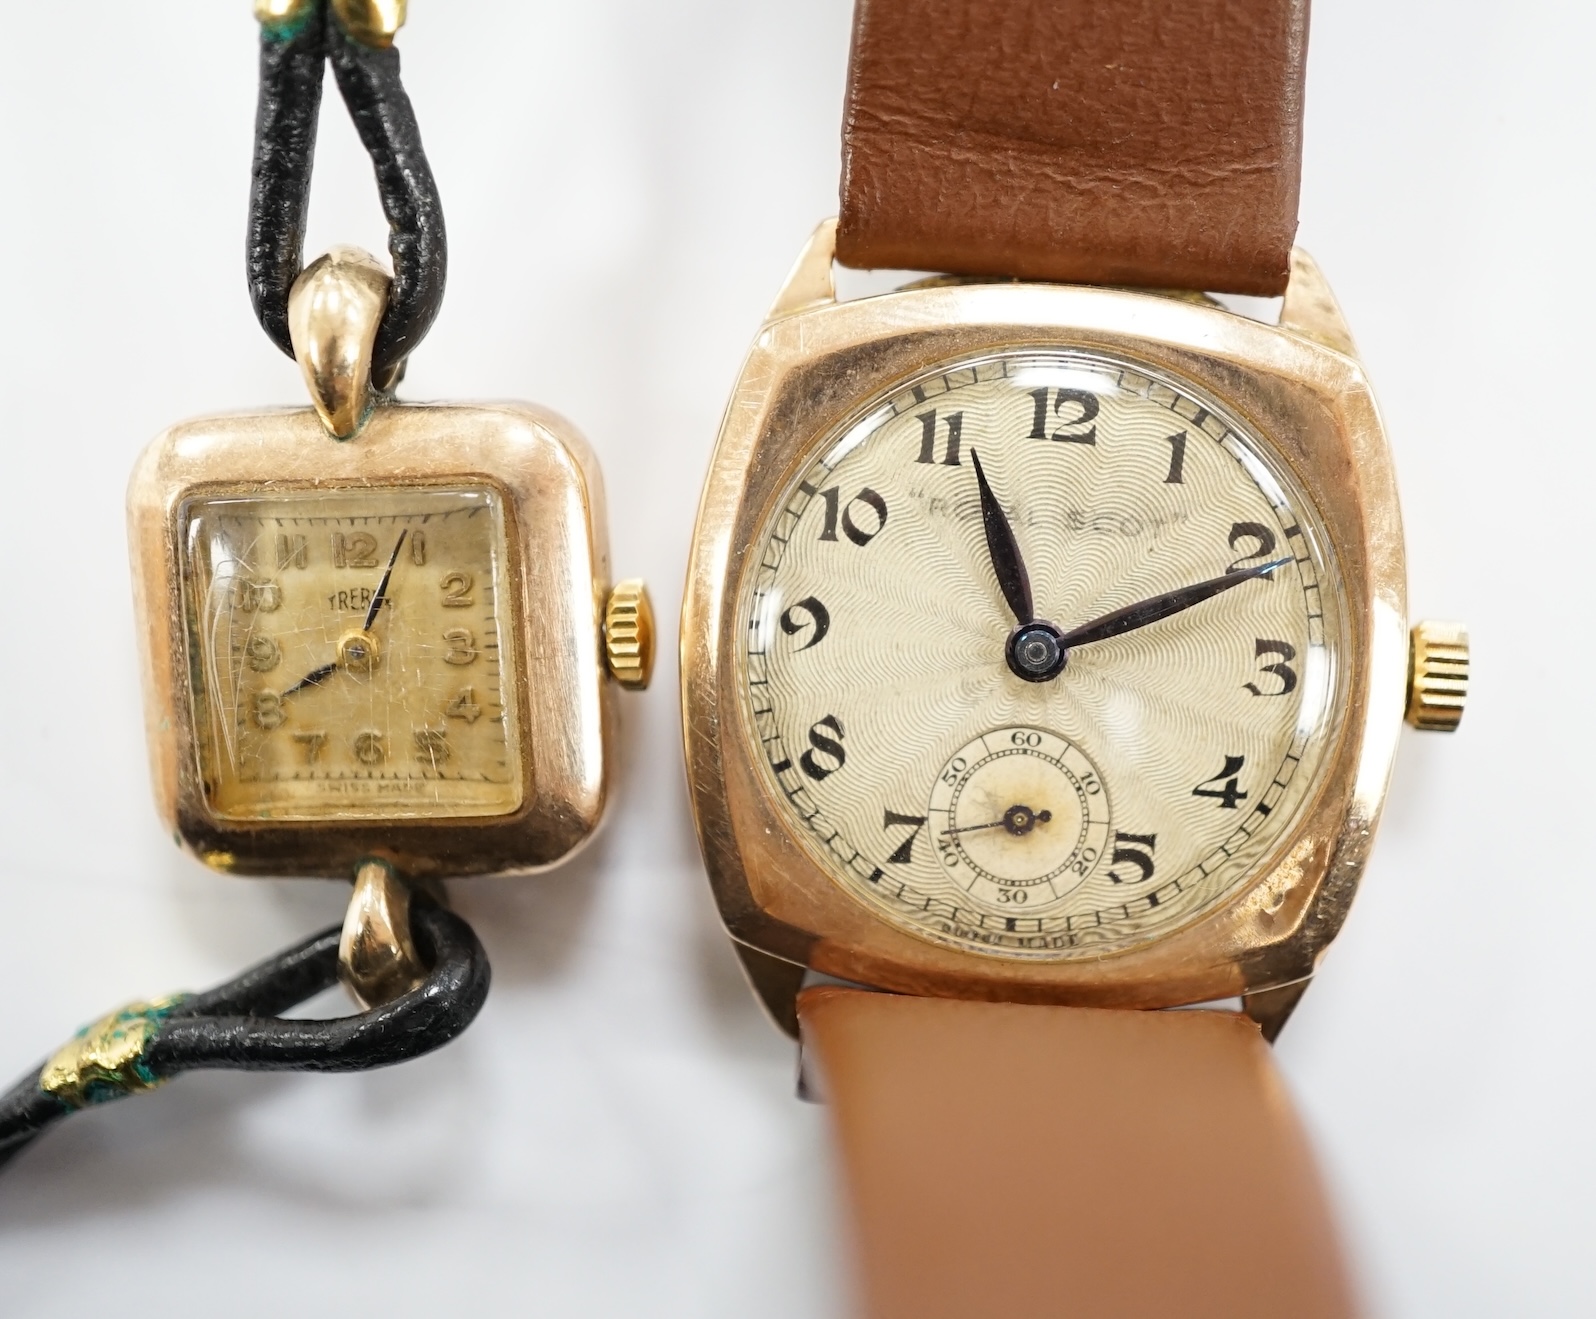 A gentleman's 9ct gold Royal manual wind wrist watch and a lady's yellow metal manual wind Trebe wrist watch.